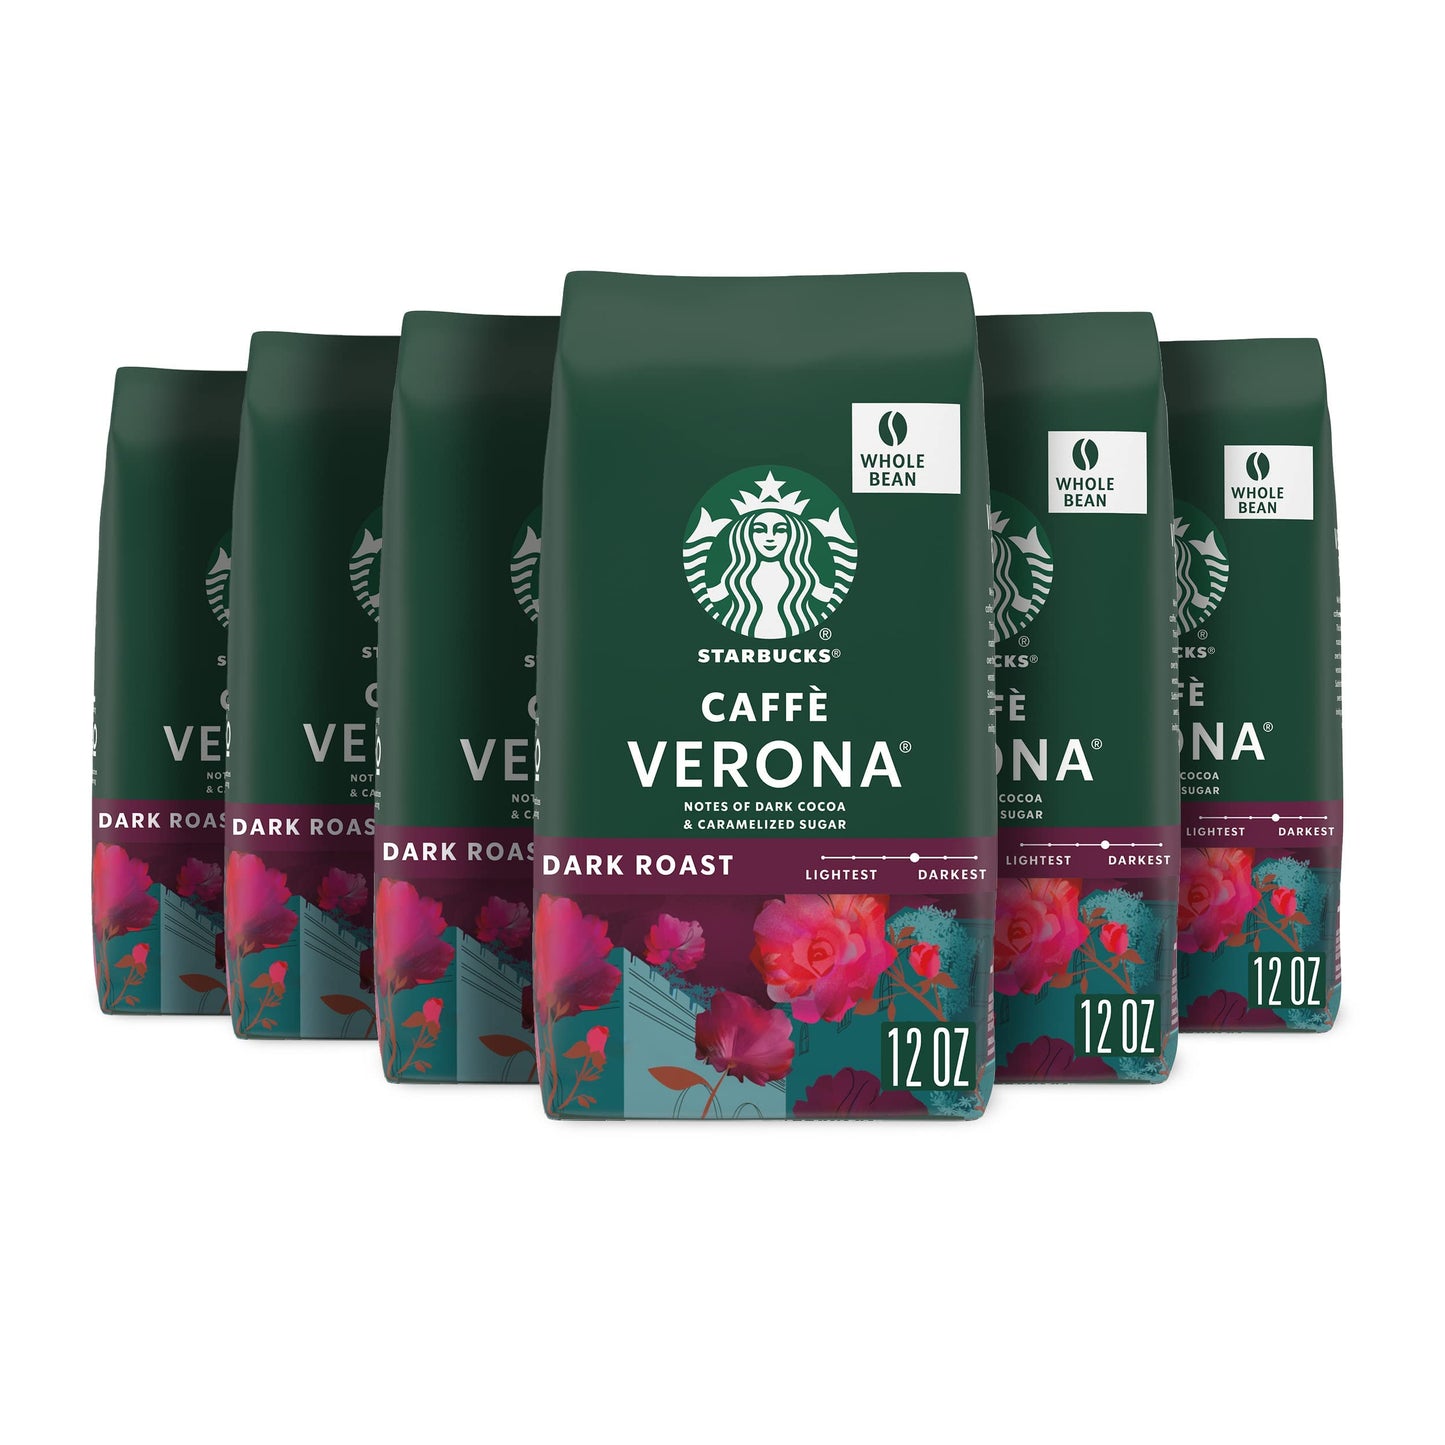 Starbucks Caffè Verona Dark Roast Whole Bean Coffee, 12-Ounce Bag (Pack of 6)